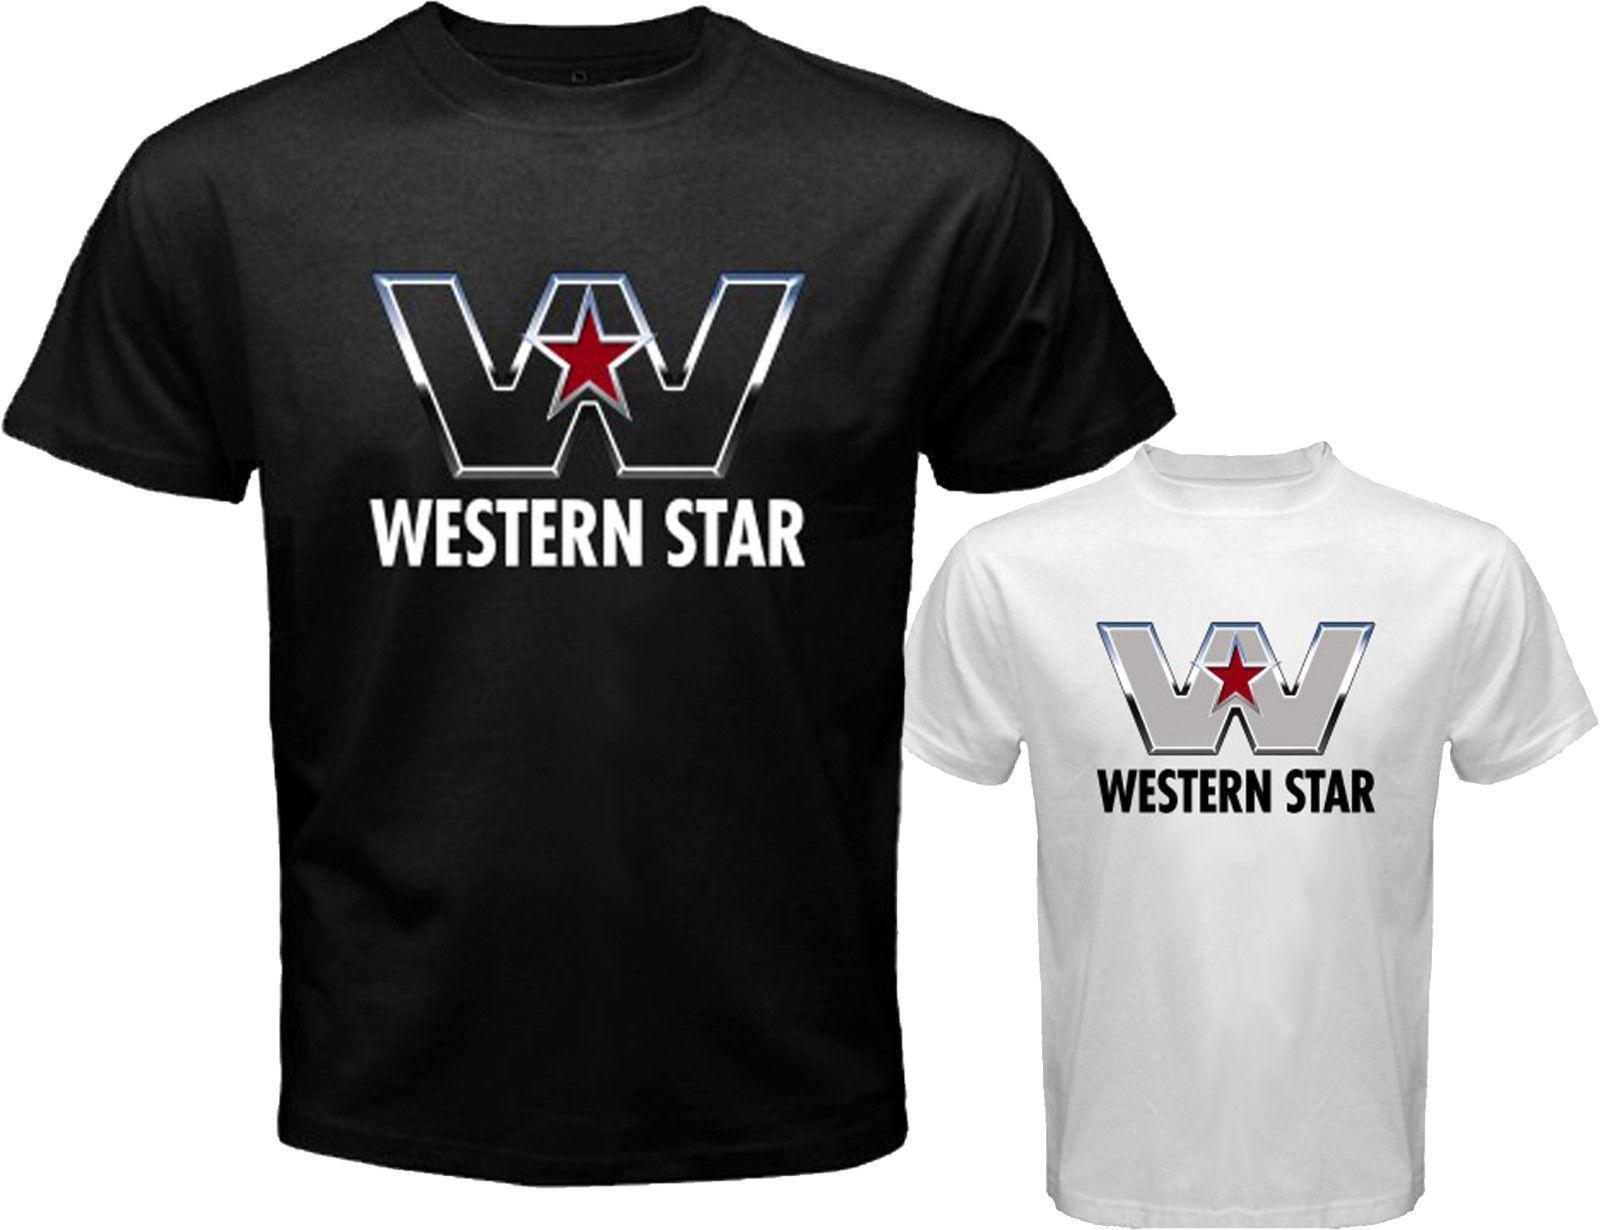 Western Star Trucks Logo - New Western Star Trucks Logo Men'S White Black T Shirt Size S M L XL ...